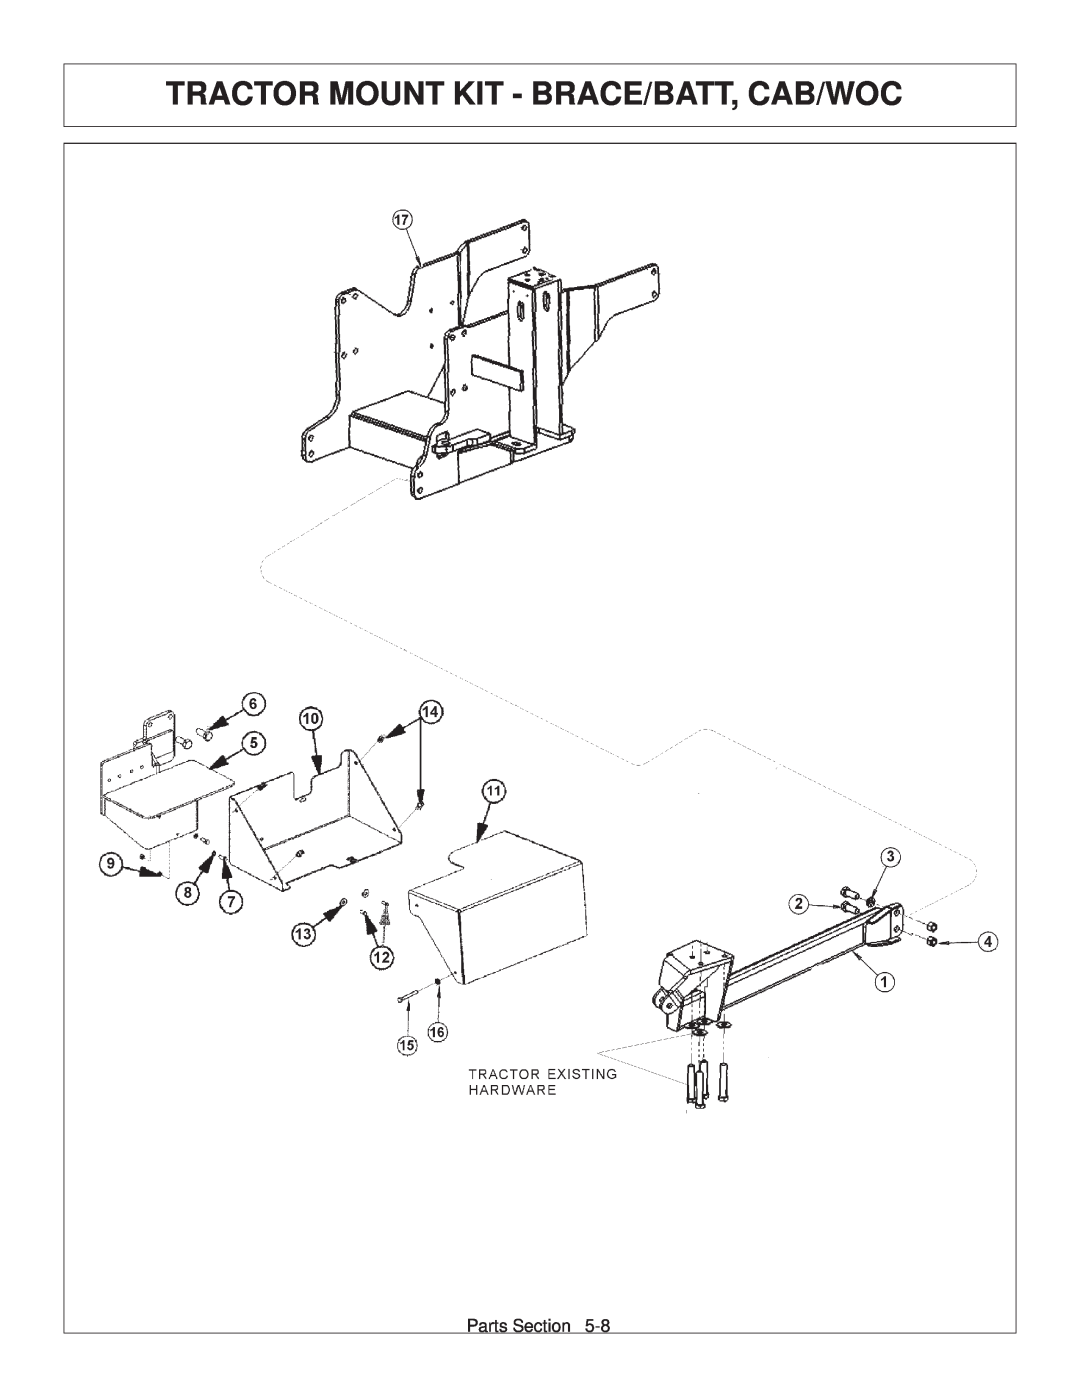 Tiger Products Co., Ltd TS 100A manual Tractor Mount Kit - Brace/Batt, Cab/Woc, Parts Section 